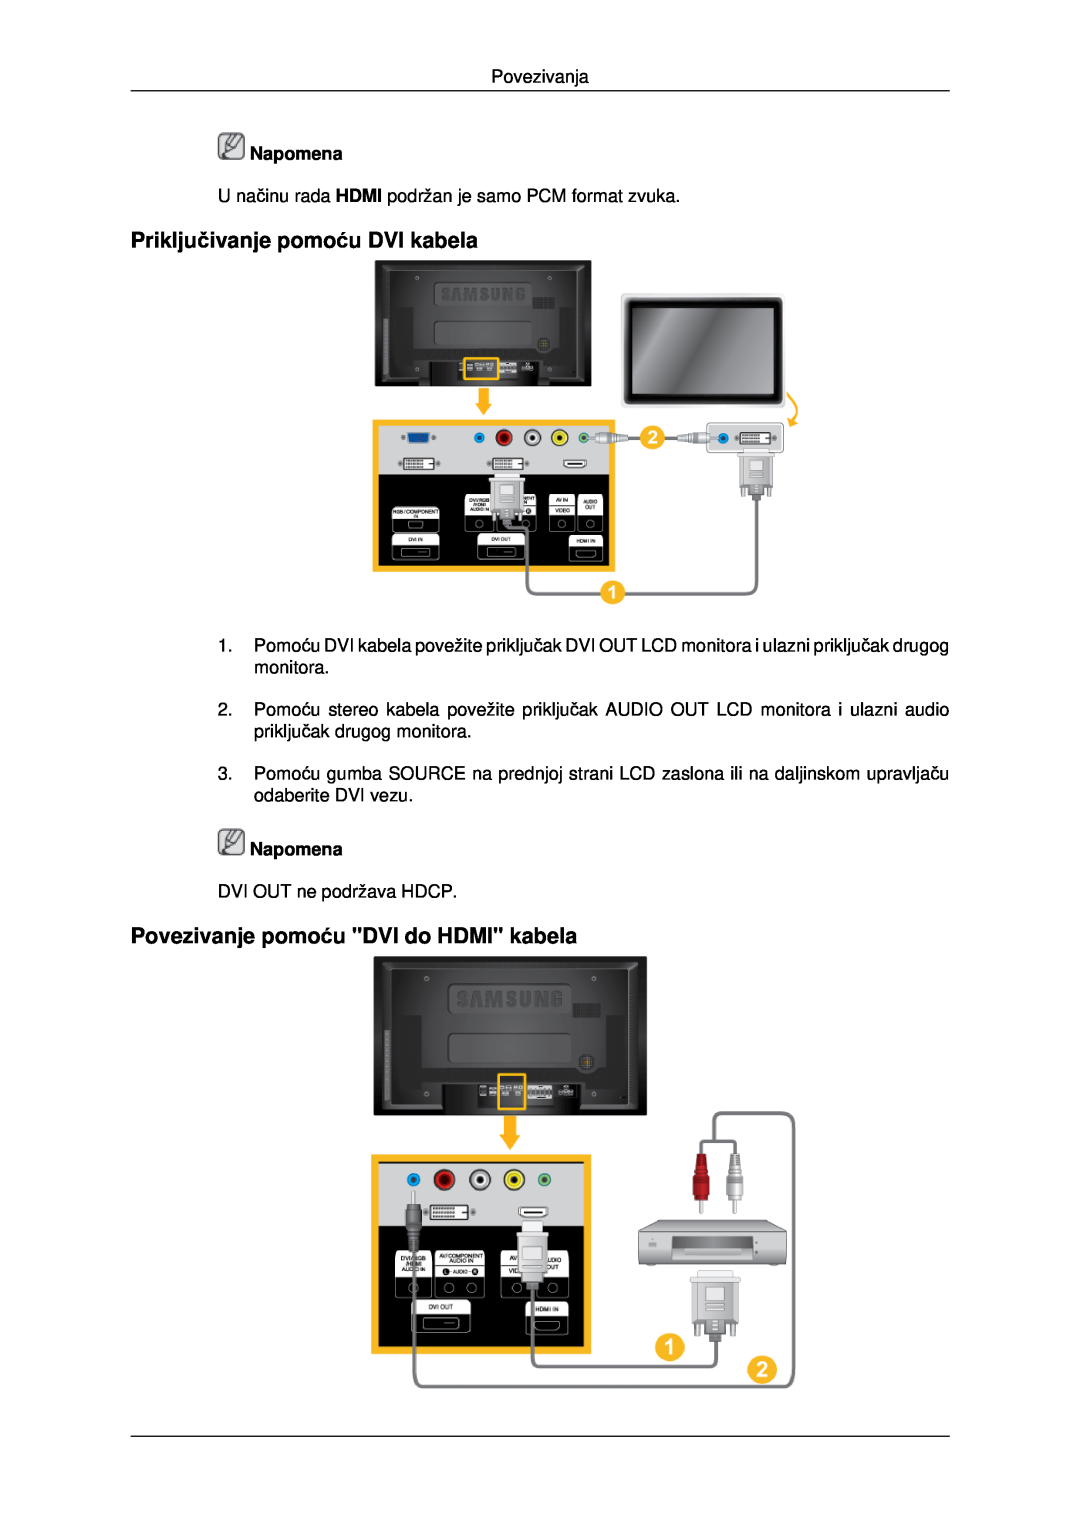 Samsung LH46MSTLBB/EN, LH40MRTLBC/EN Priključivanje pomoću DVI kabela, Povezivanje pomoću DVI do HDMI kabela, Napomena 